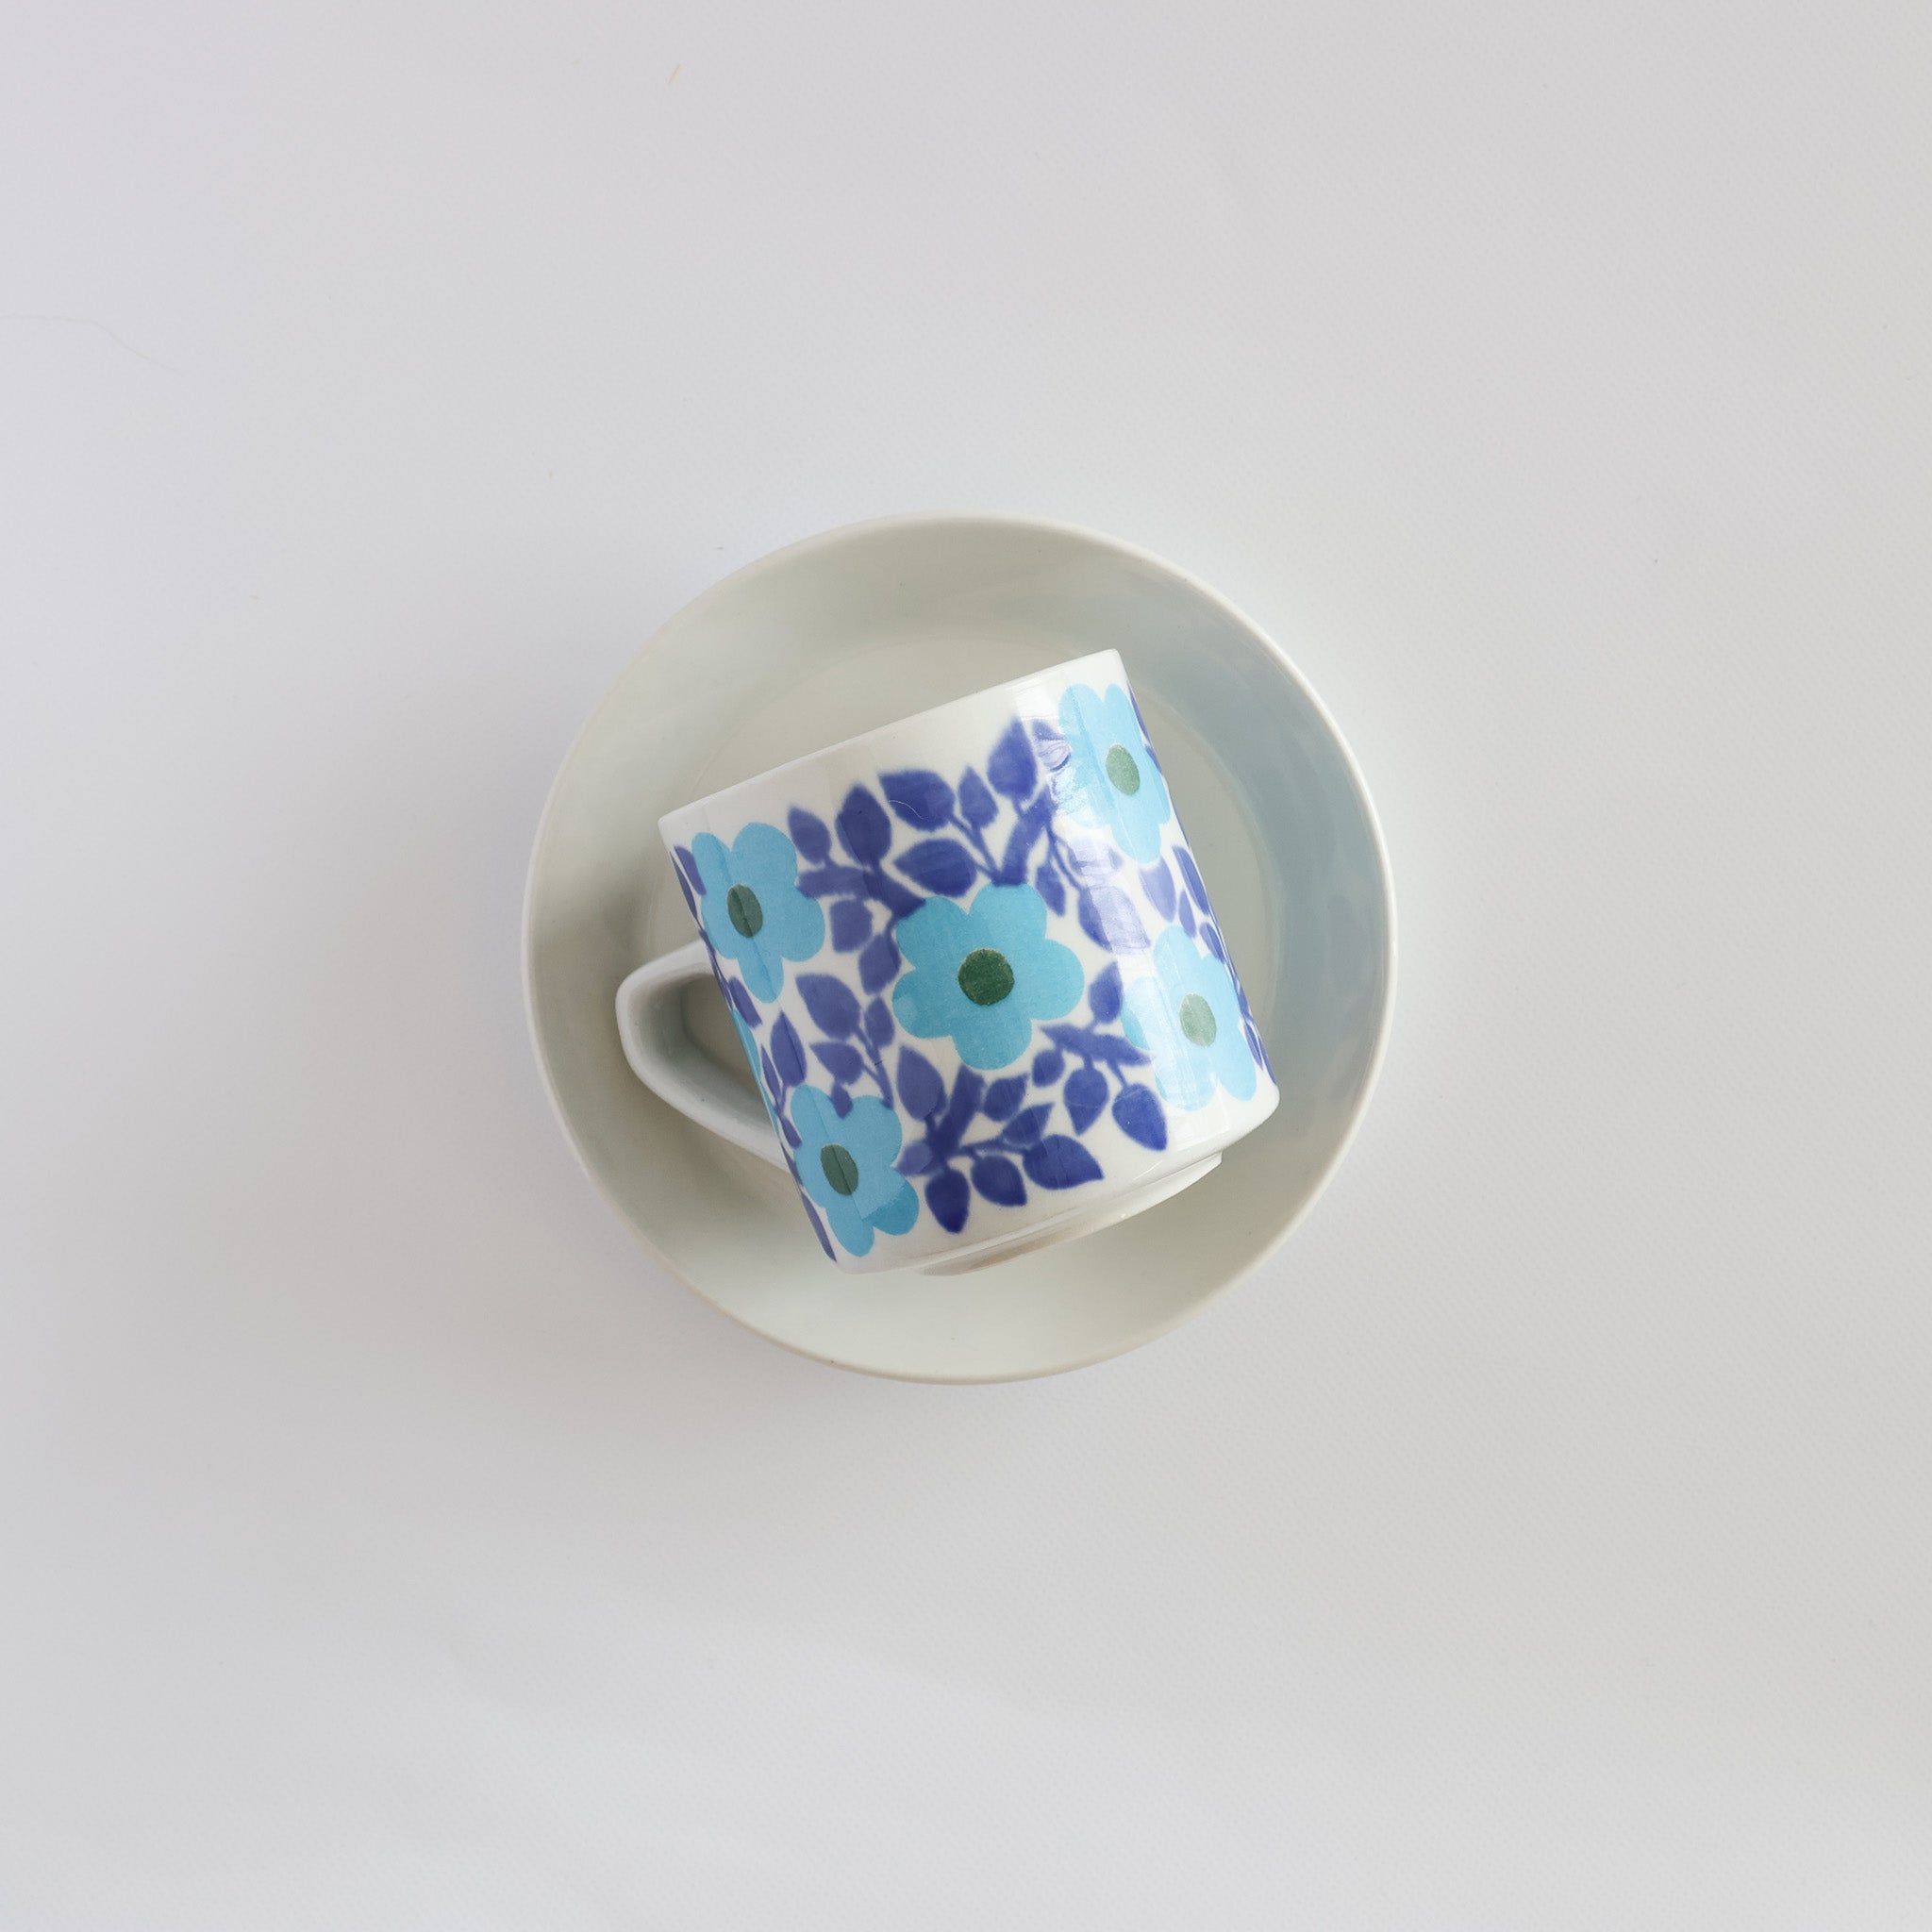 ahmet (アーメット) cup&saucer + plate / arabia(アラビア) / 北欧